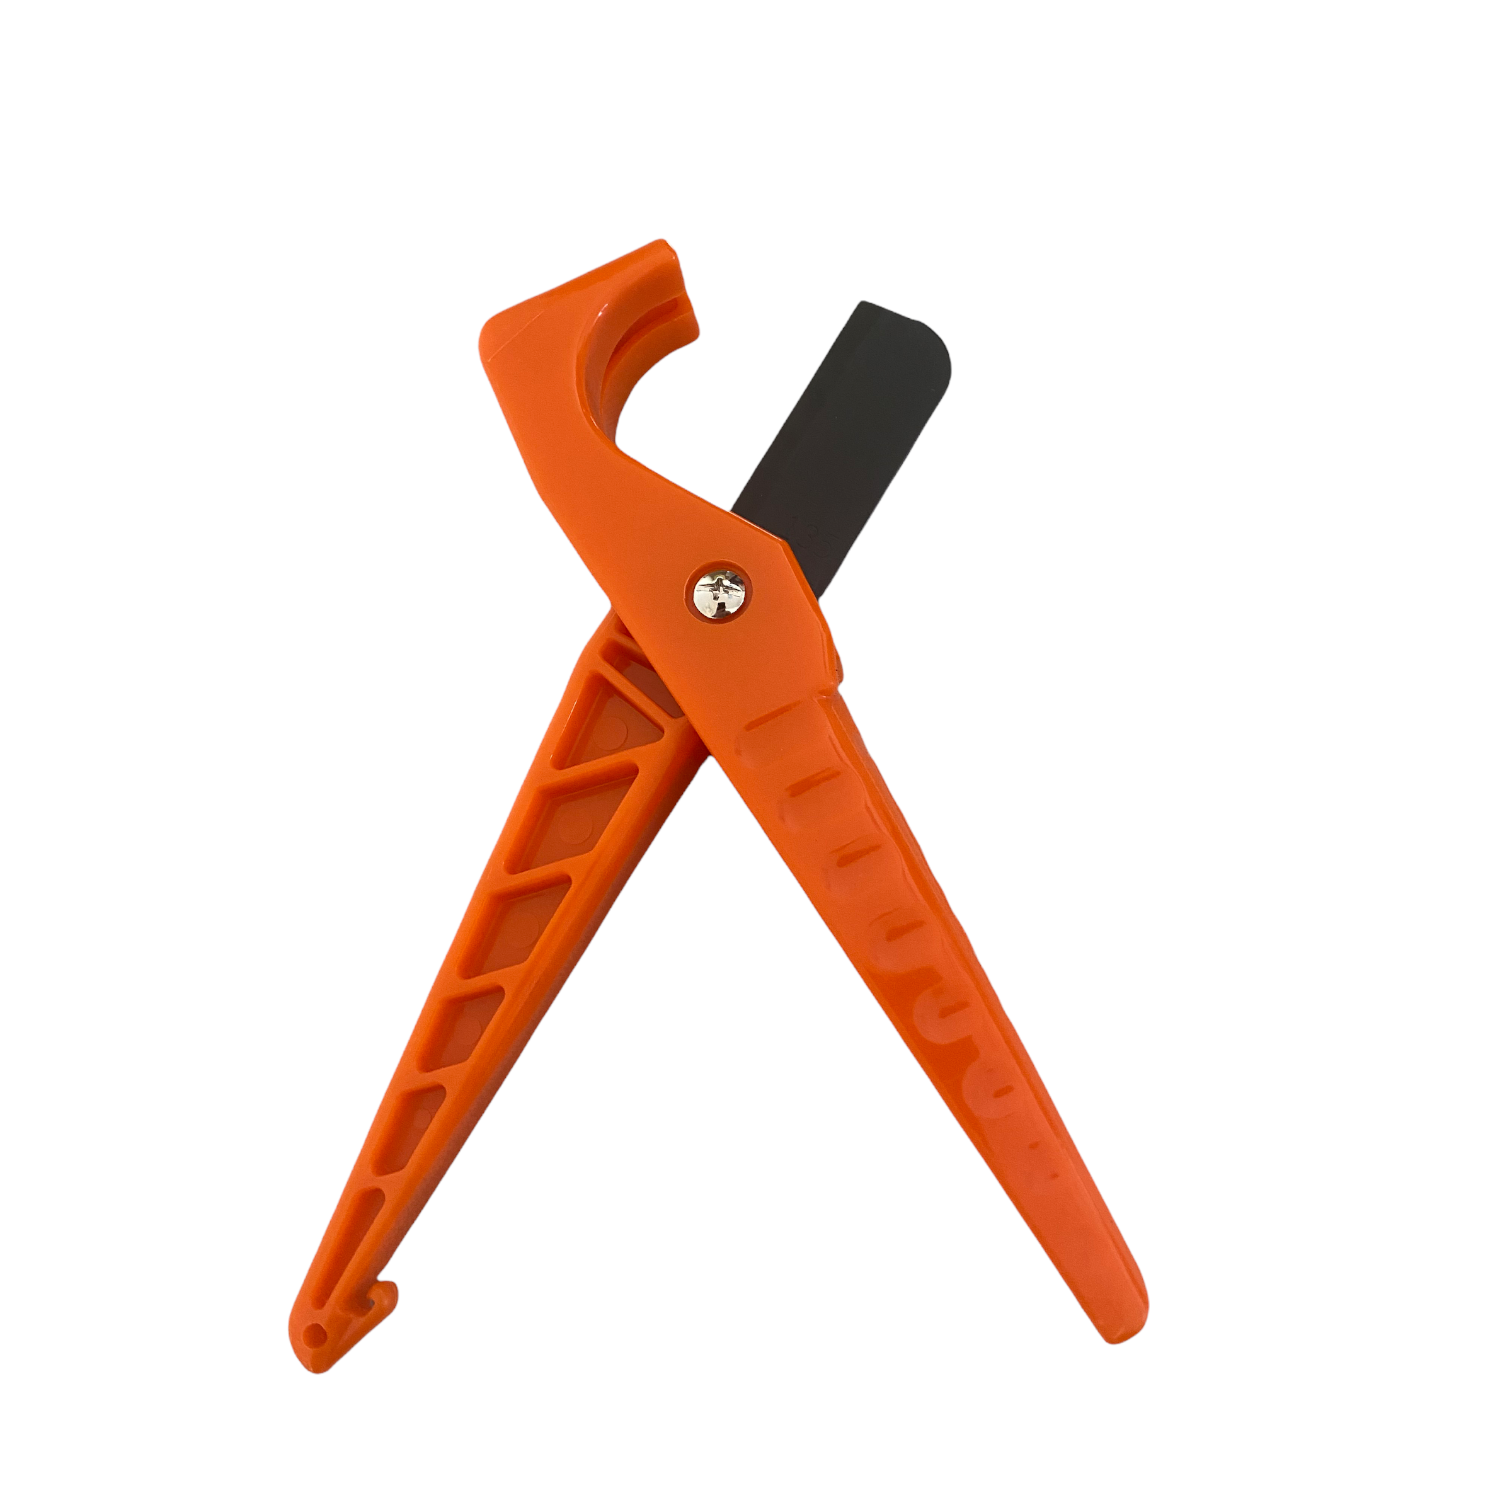 3-42mm Professional PVC Pipe Cutter - 65Mn Blade / Orange